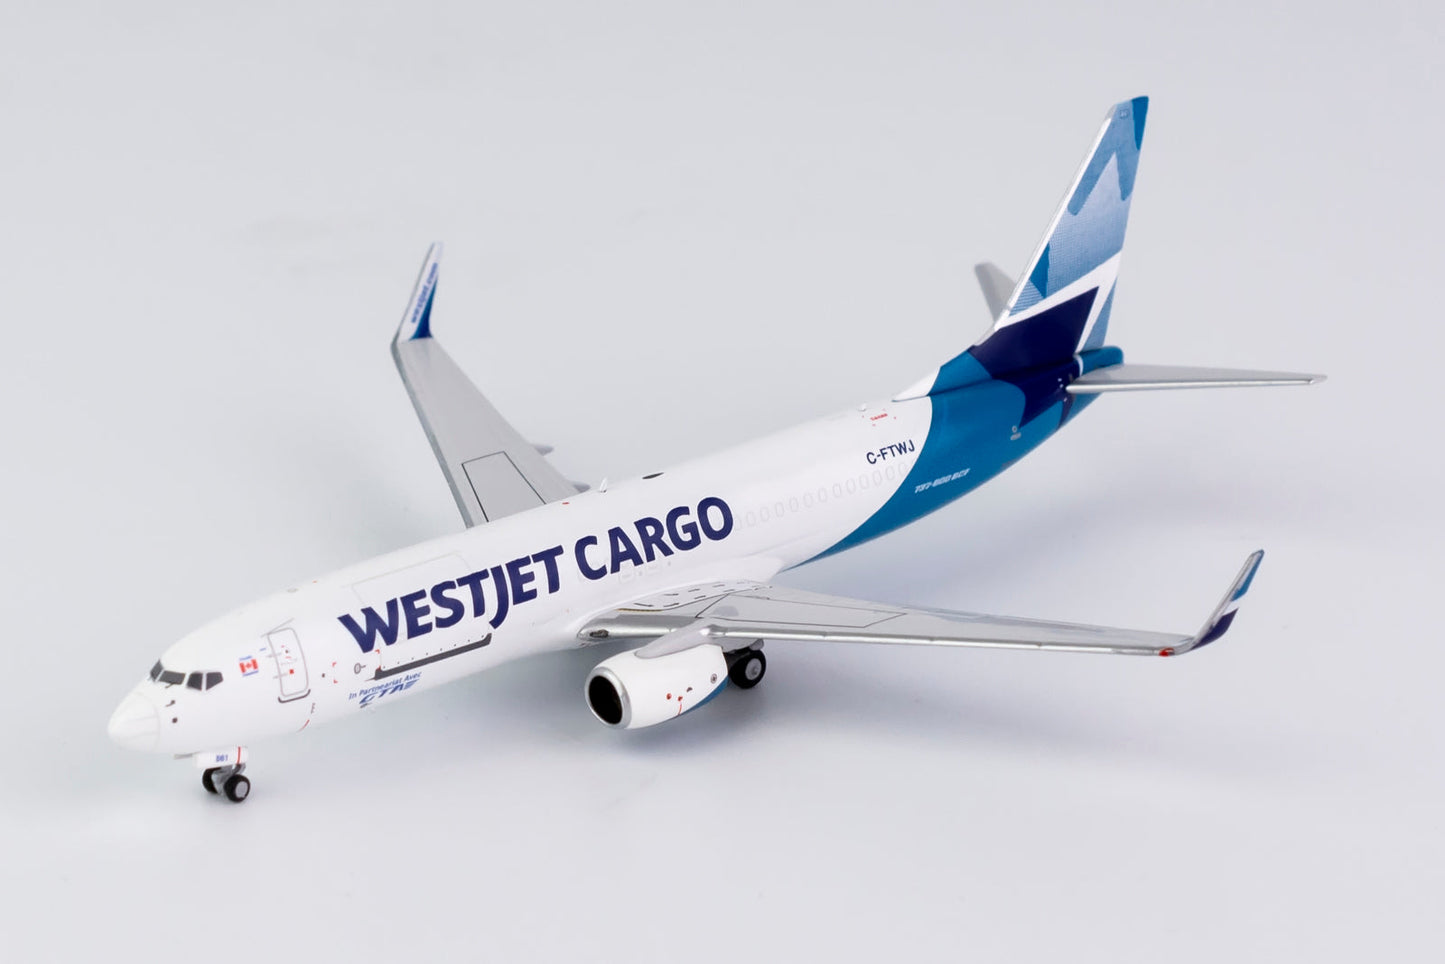 *1/400 Westjet Cargo B 737-800BCF/w NG Models 58135